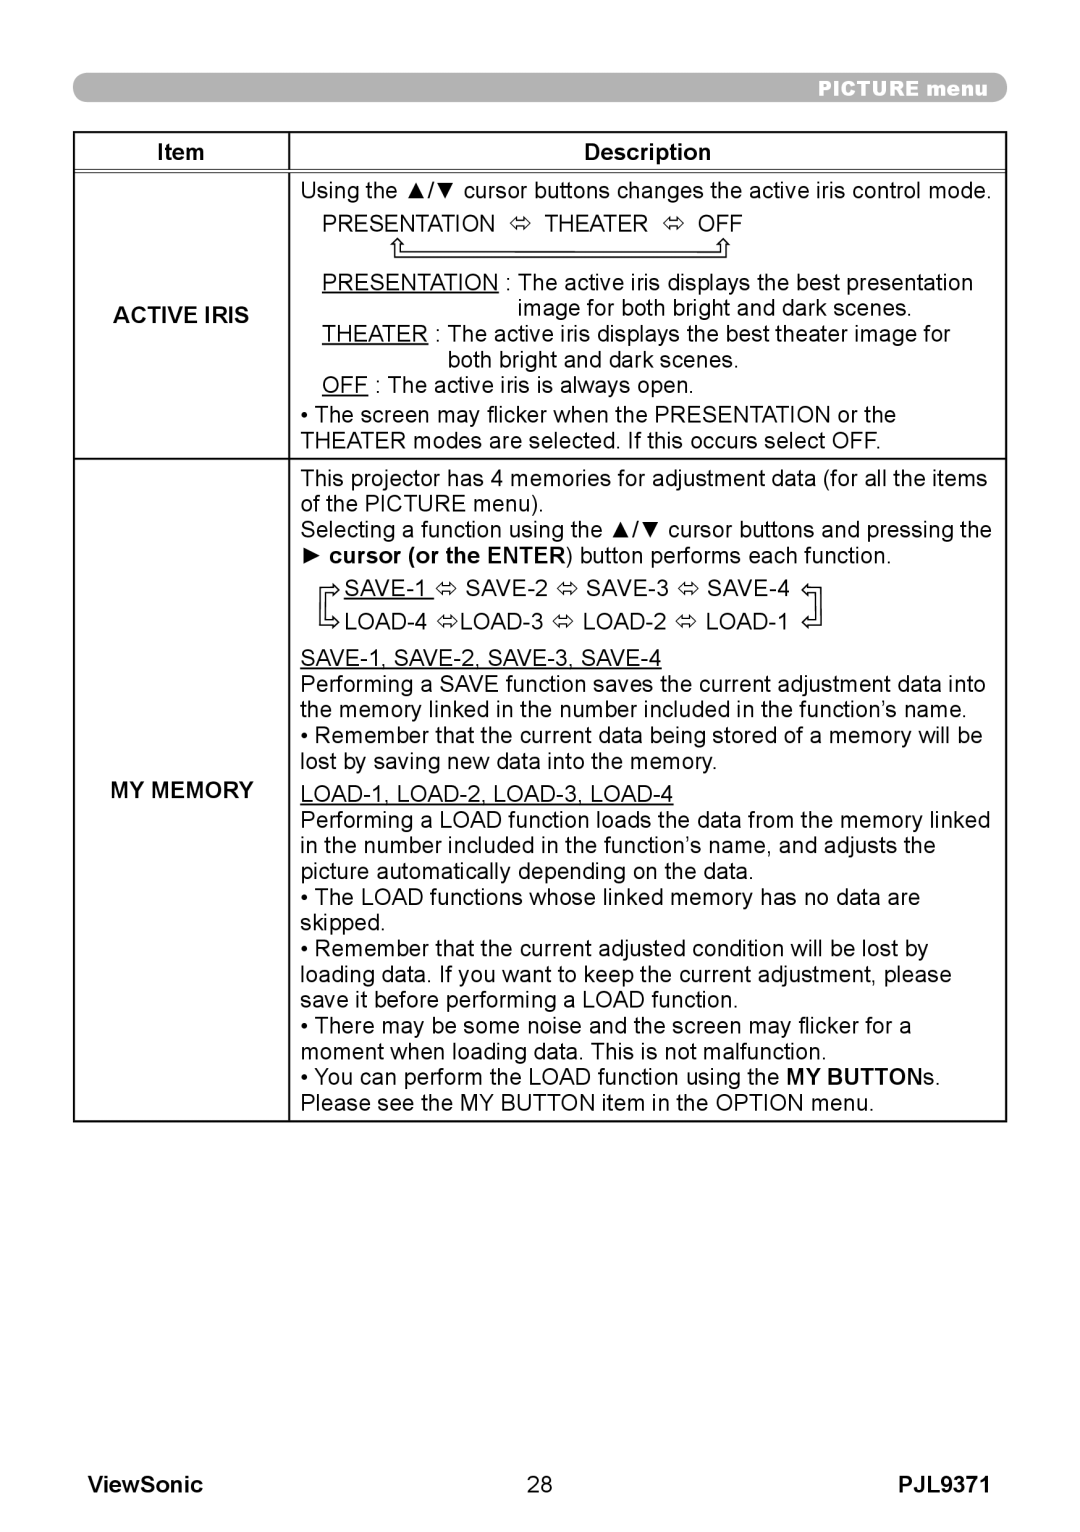 ViewSonic pjl9371 manual Description, Active Iris, ViewSonic 